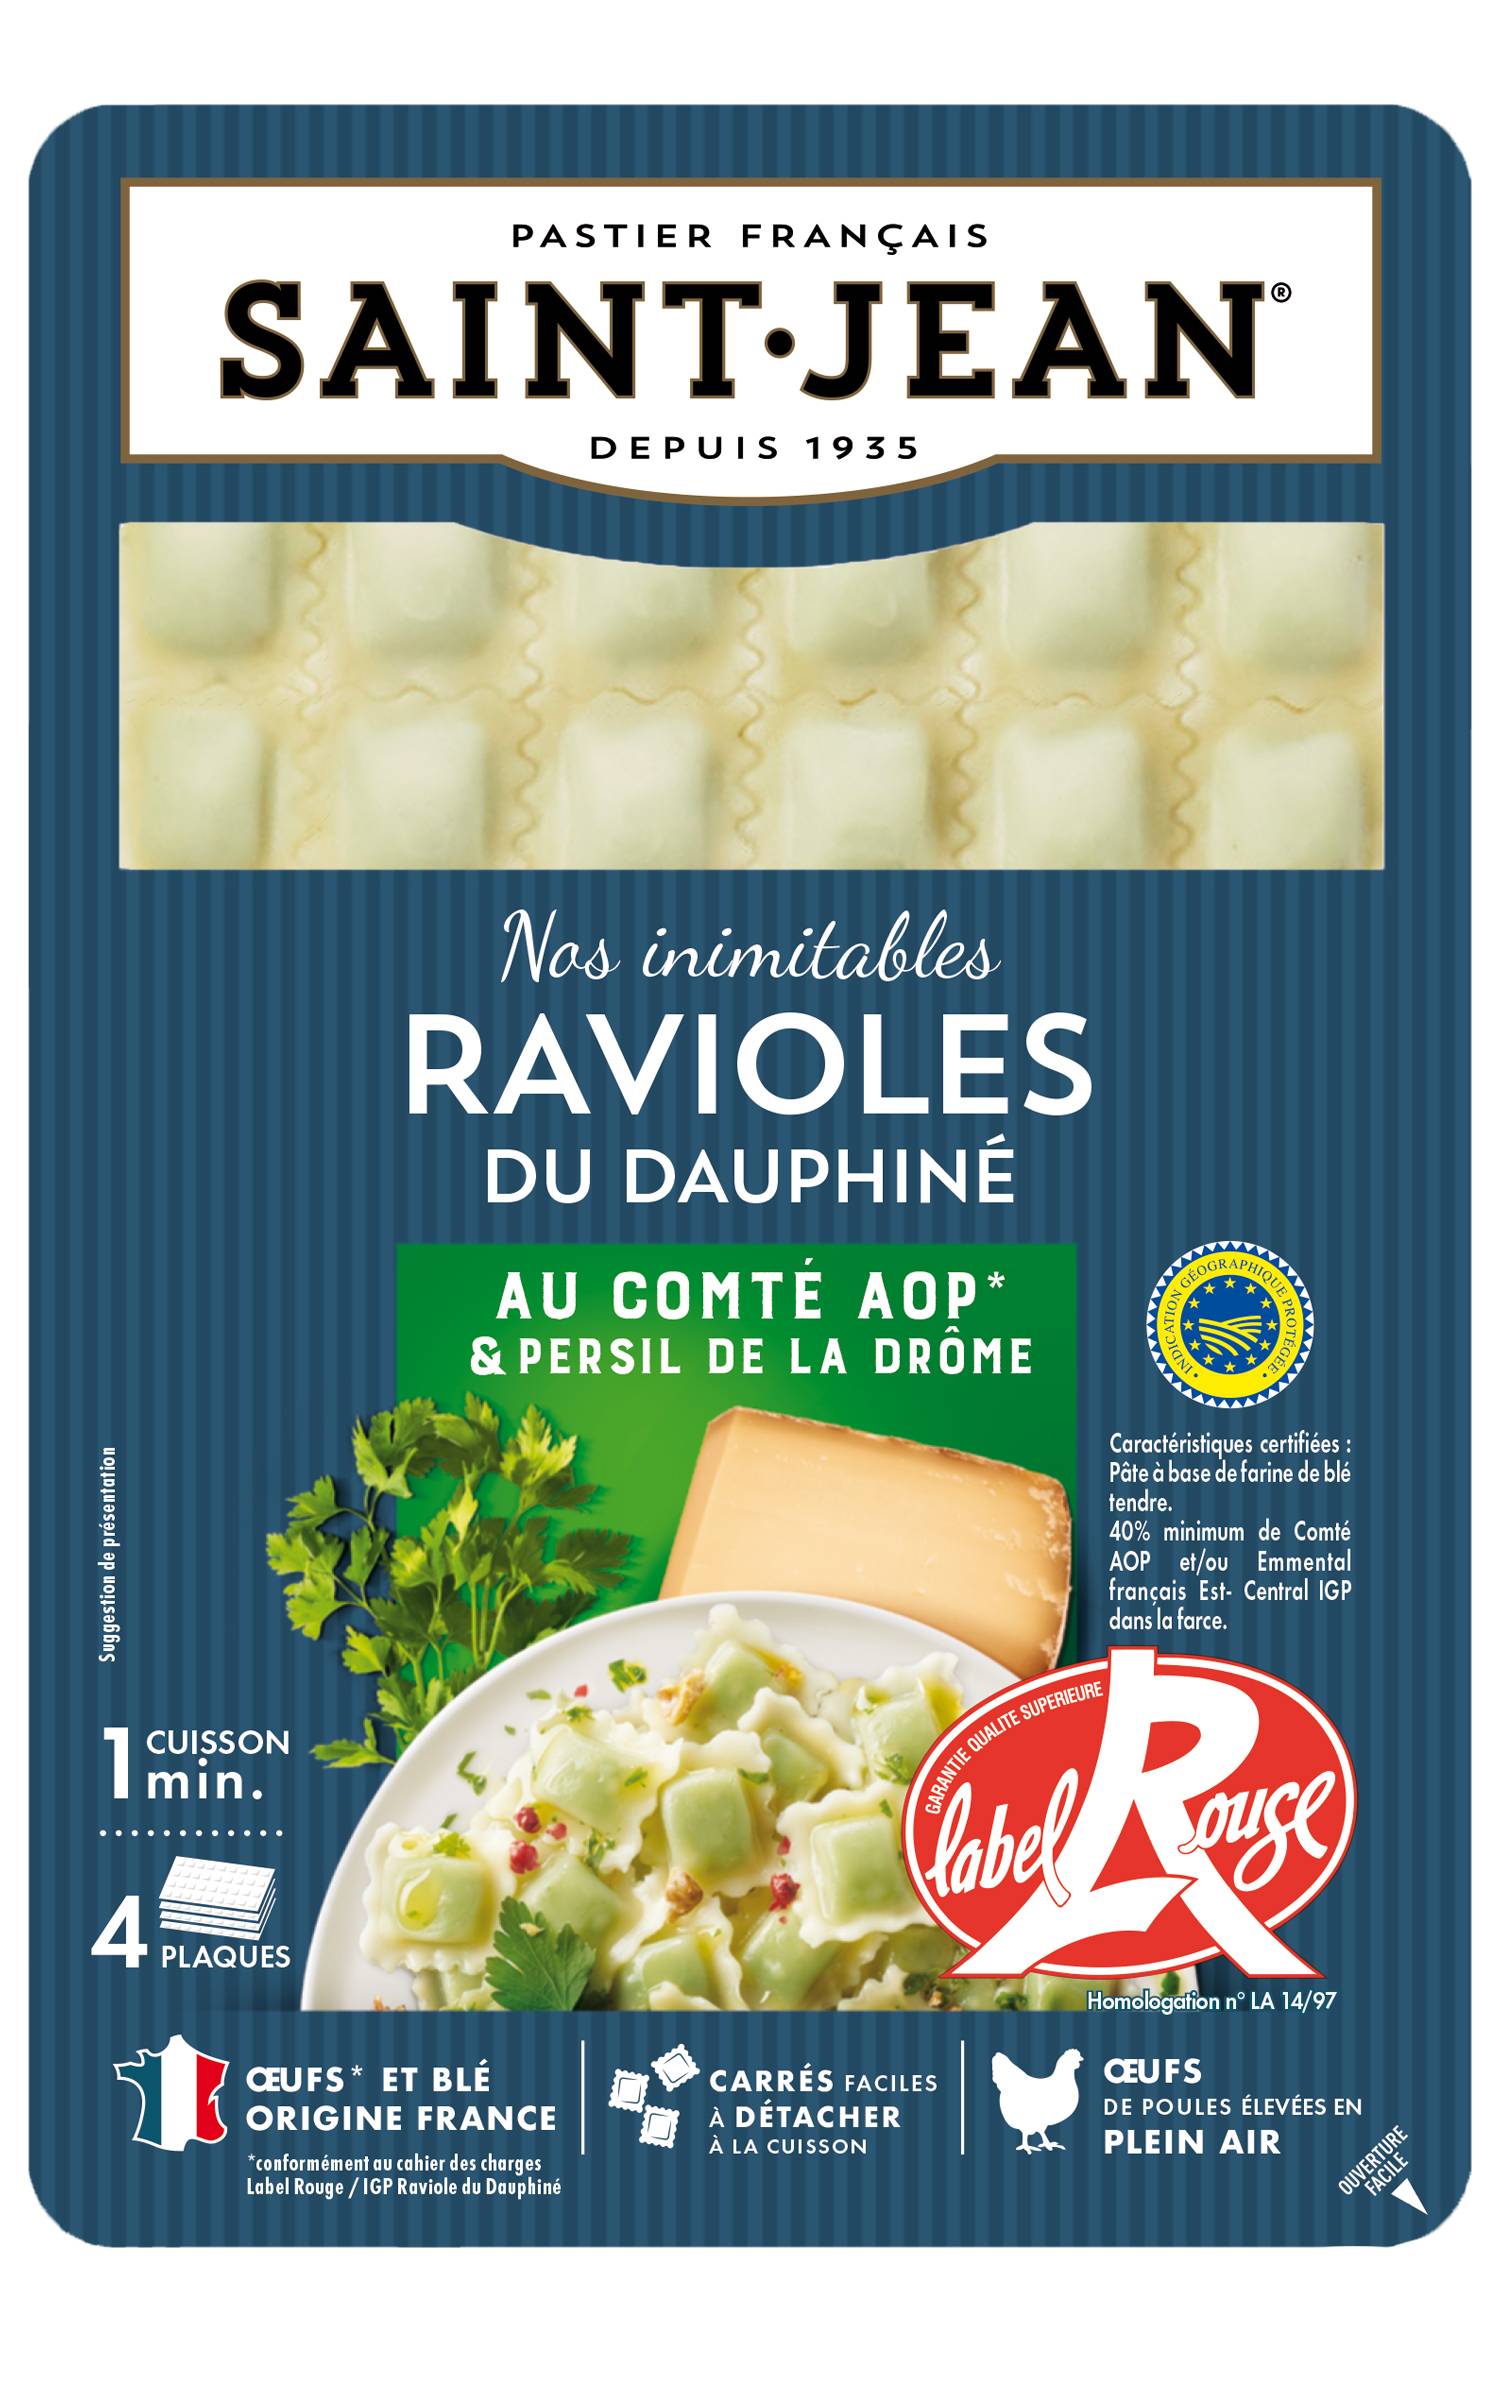 Raviole du Dauphiné - Wikipedia